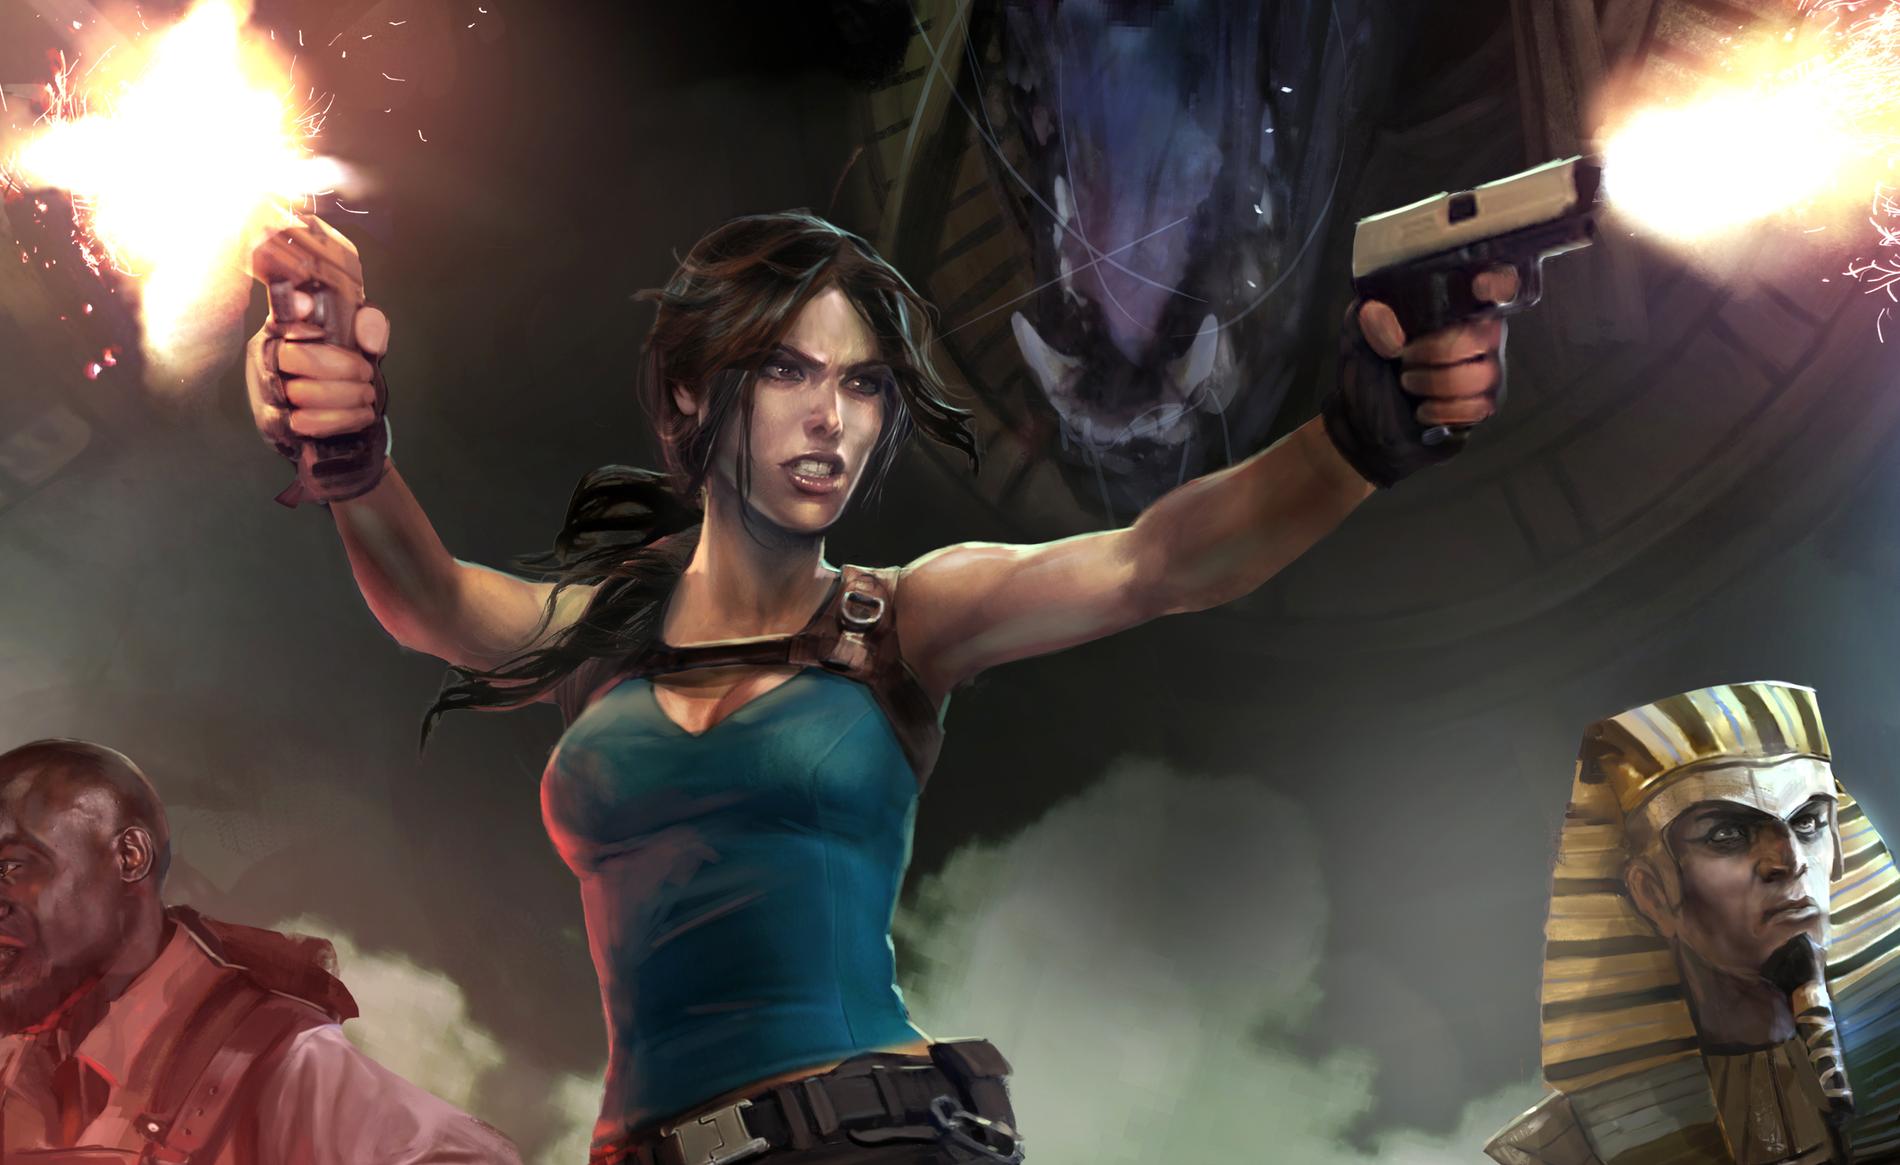 ”Lara Croft and the temple of osiris”.